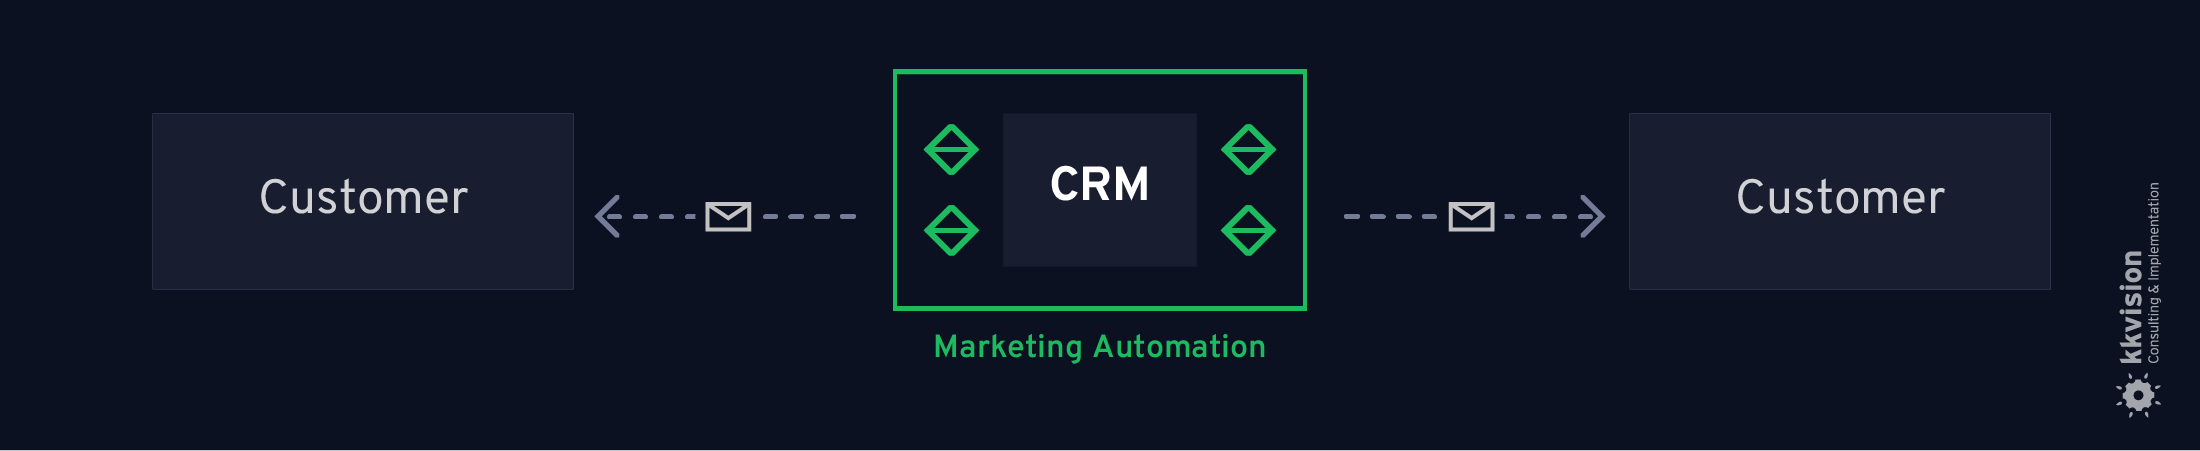 CRM & Marketing Automation_Maintain customer data